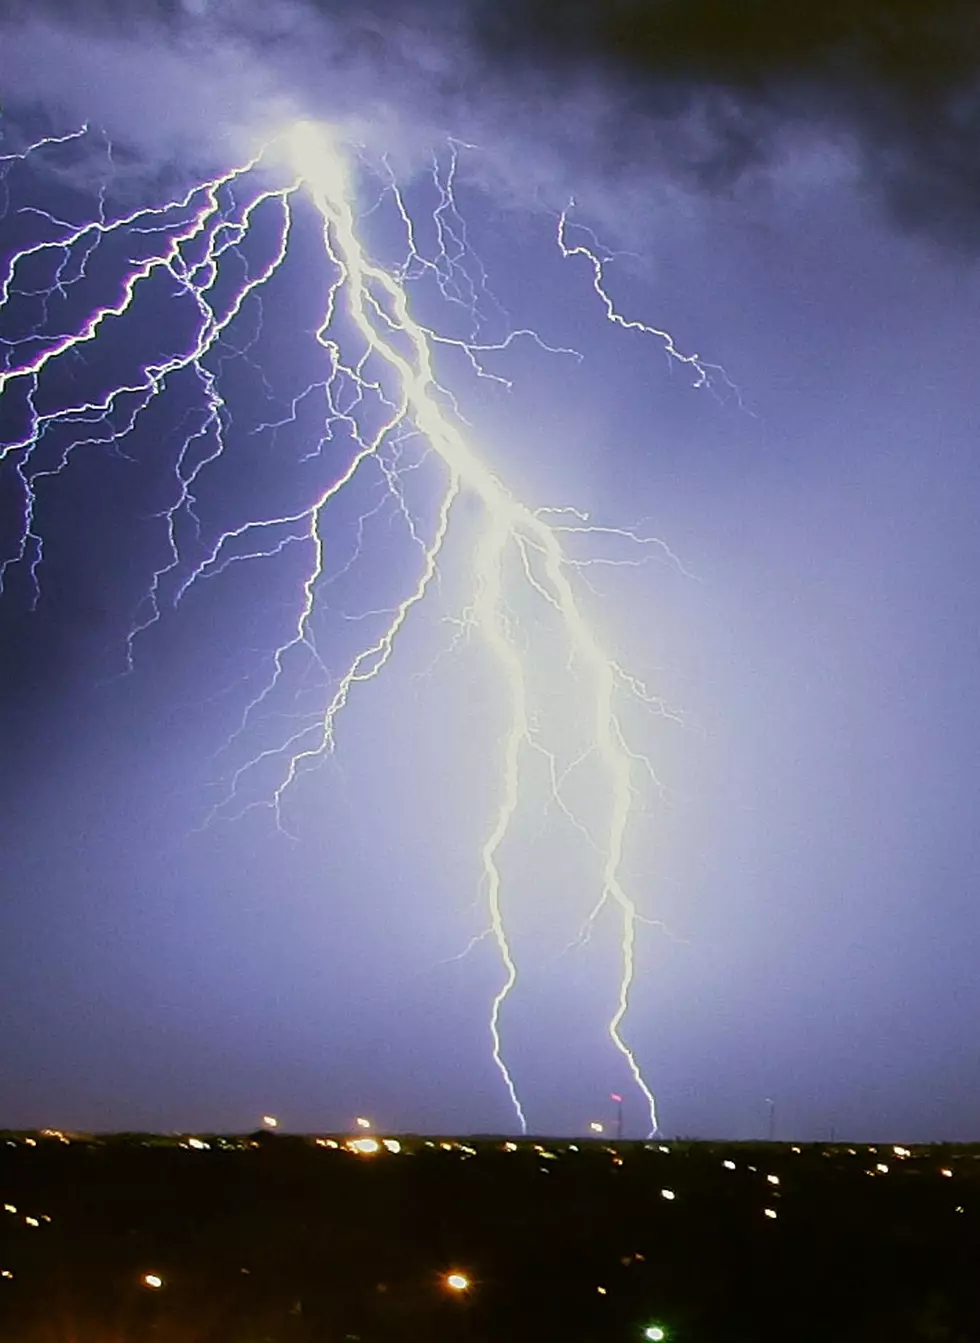 Bolt of Lightning Nearly Strikes Couple Taking Selfie [Video]